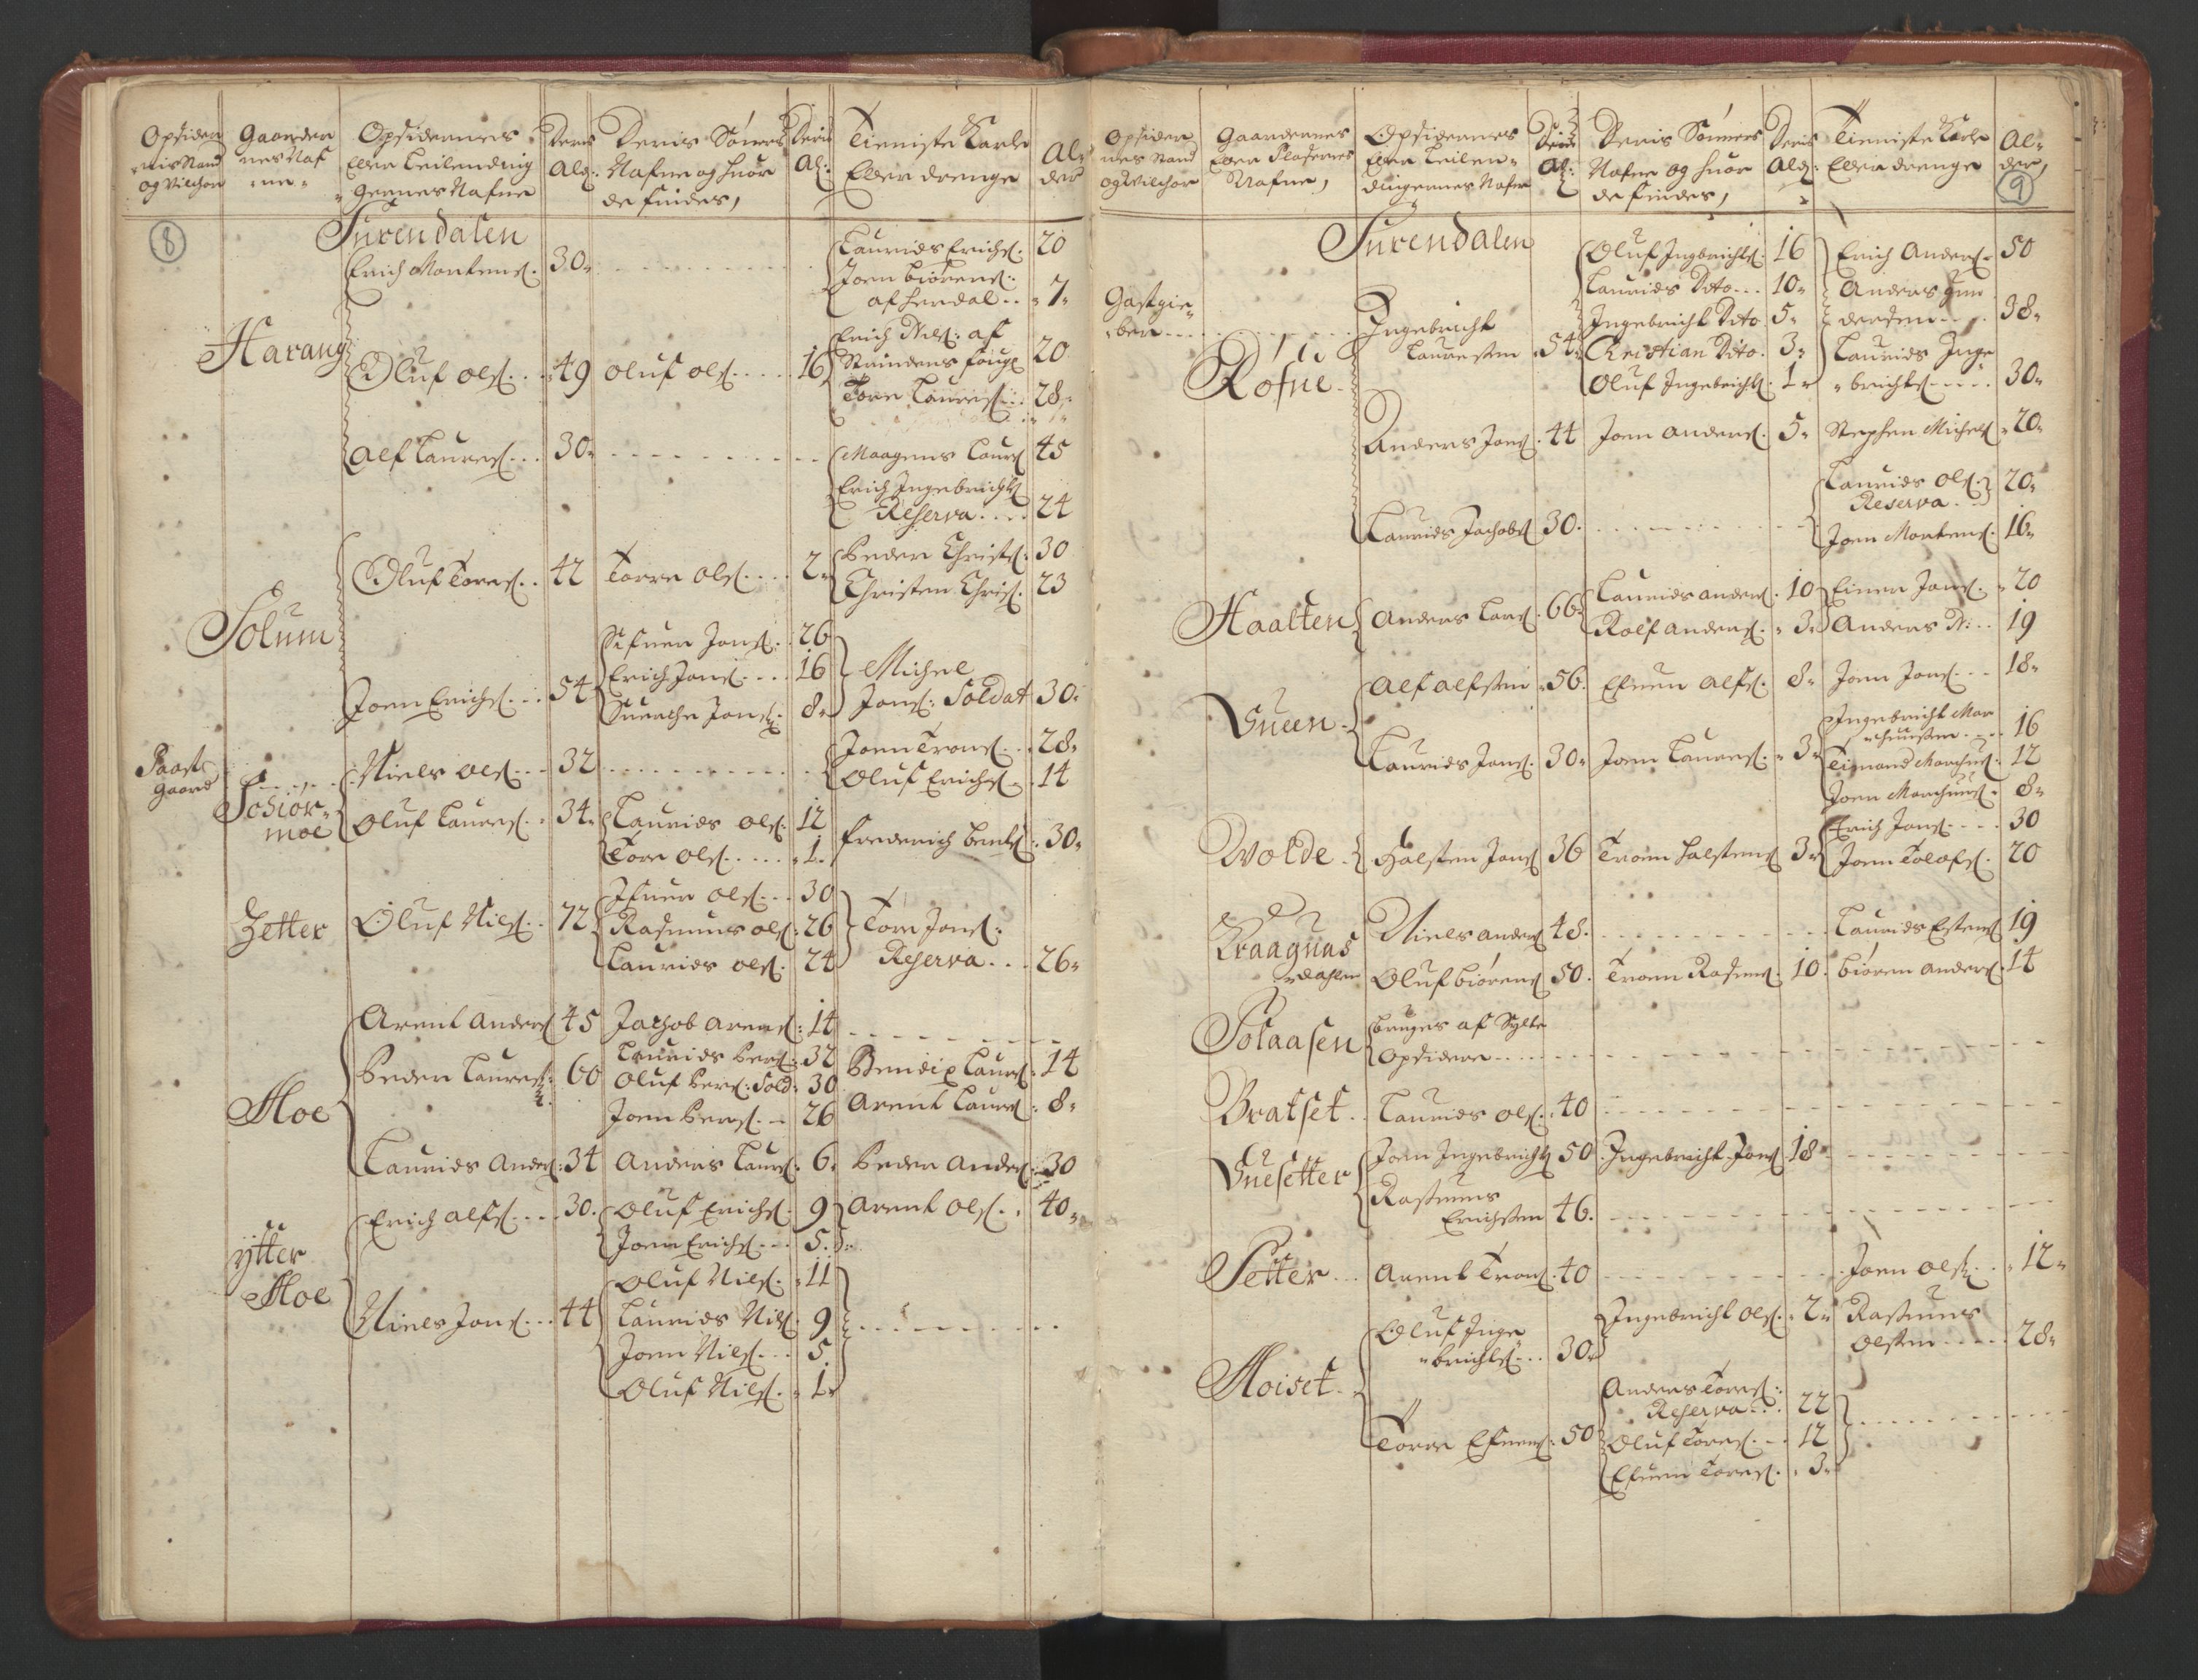 RA, Manntallet 1701, nr. 11: Nordmøre fogderi og Romsdal fogderi, 1701, s. 8-9